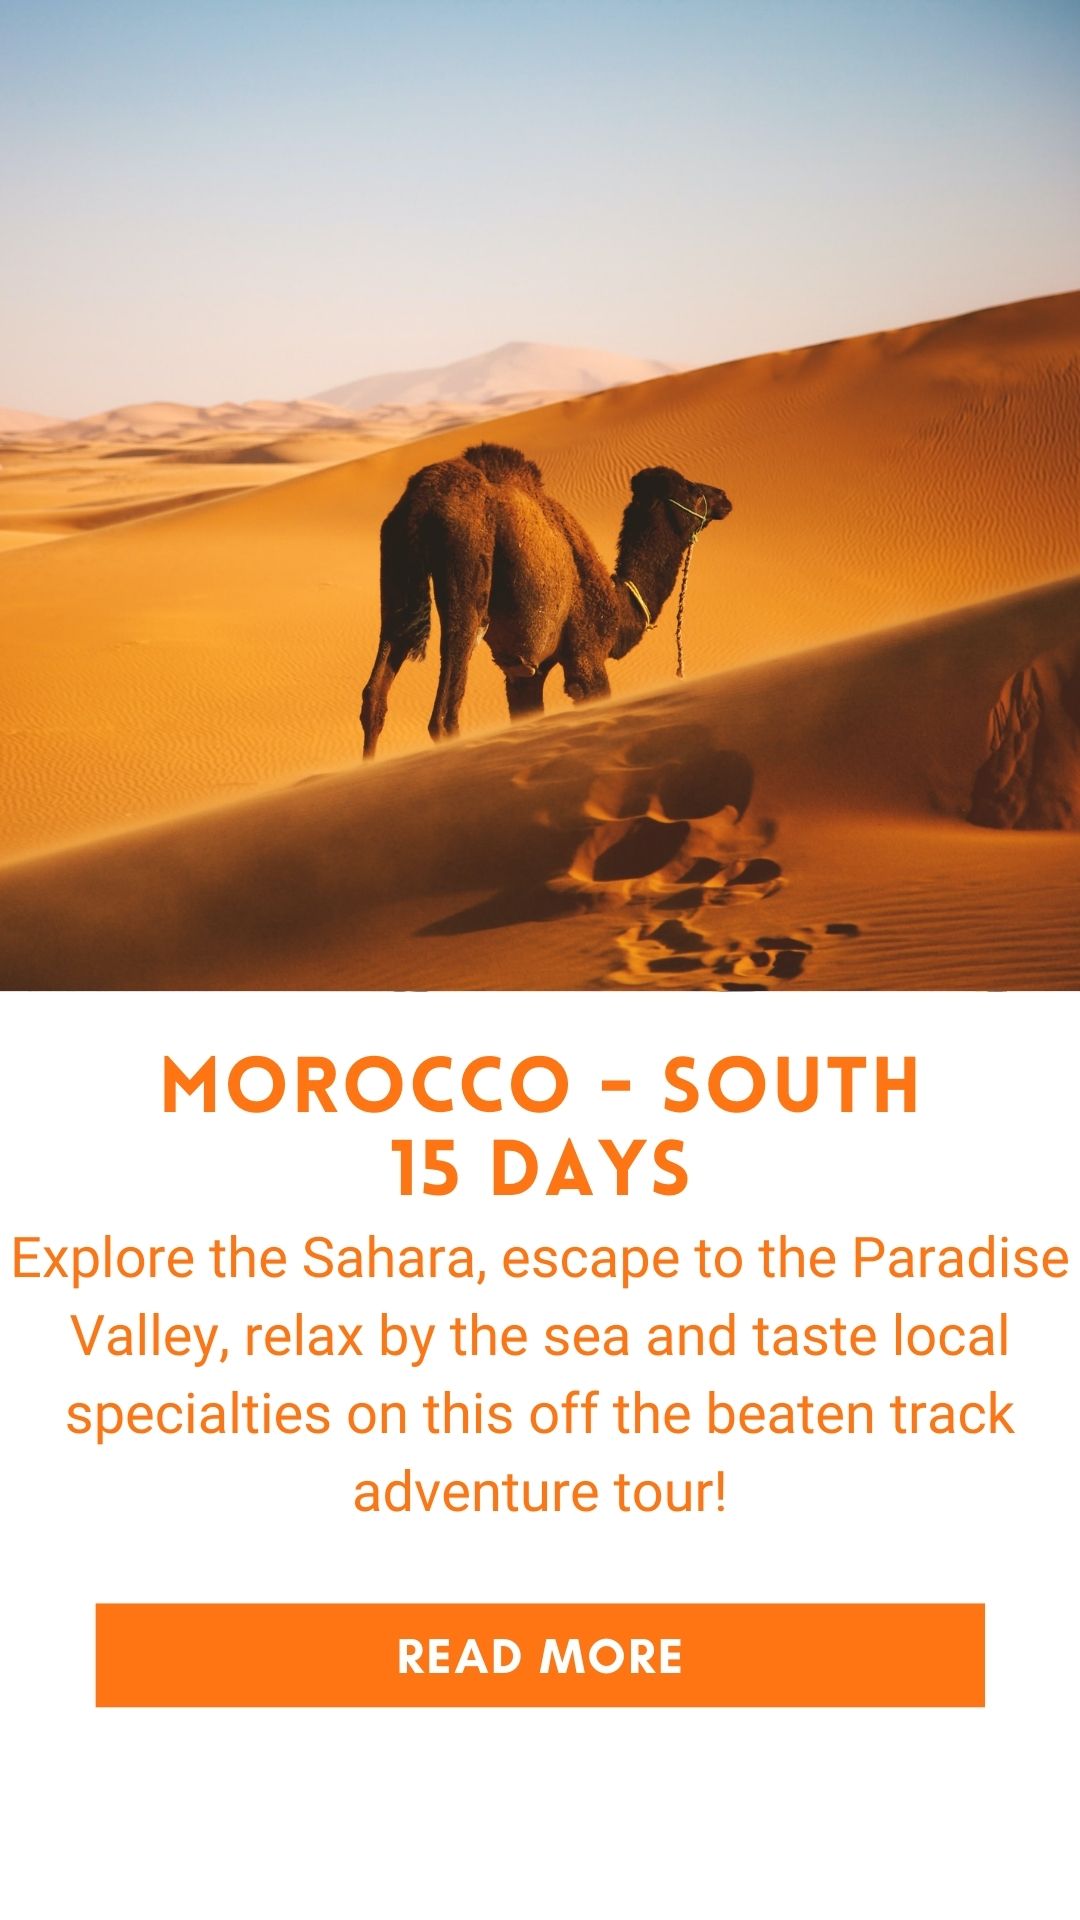 Organized trip in Morocco